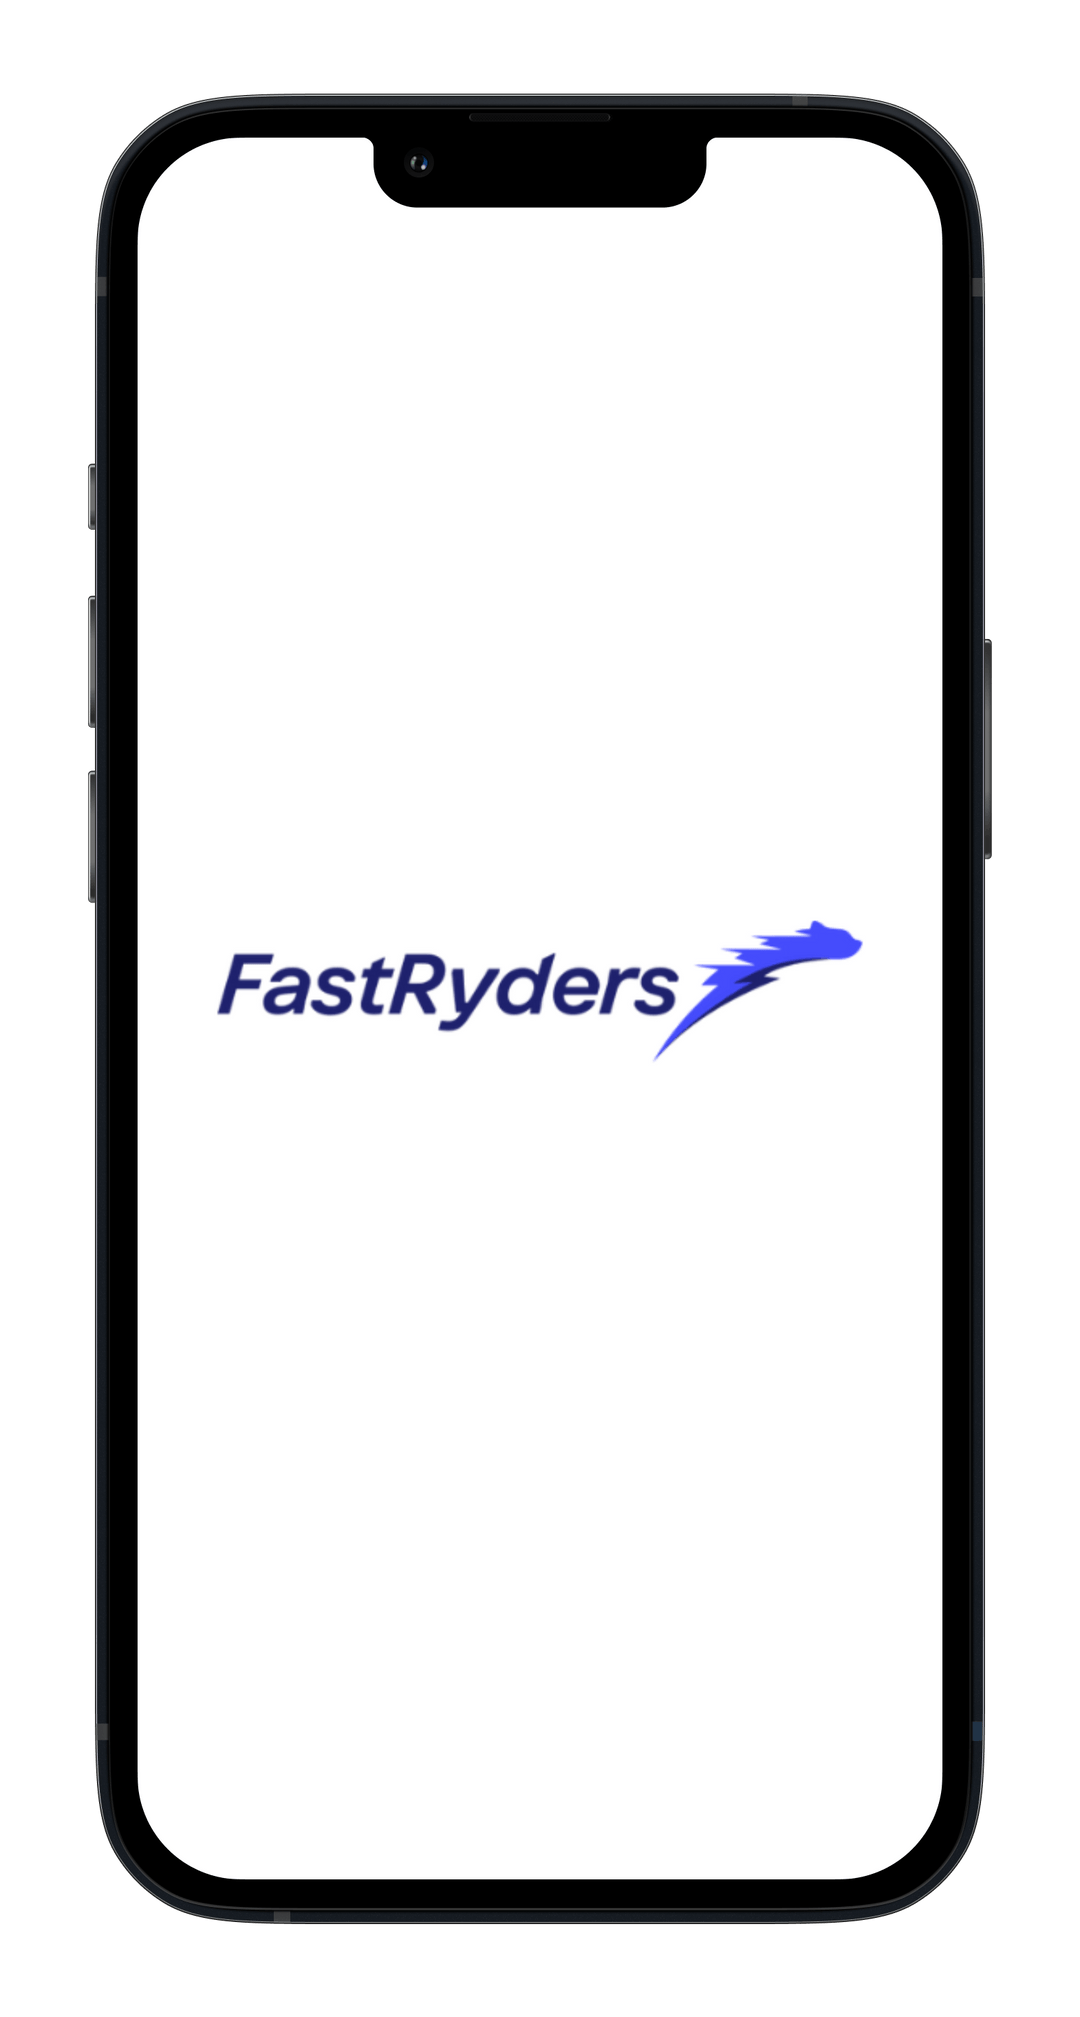 FastRyders Nigeria Delivery Service